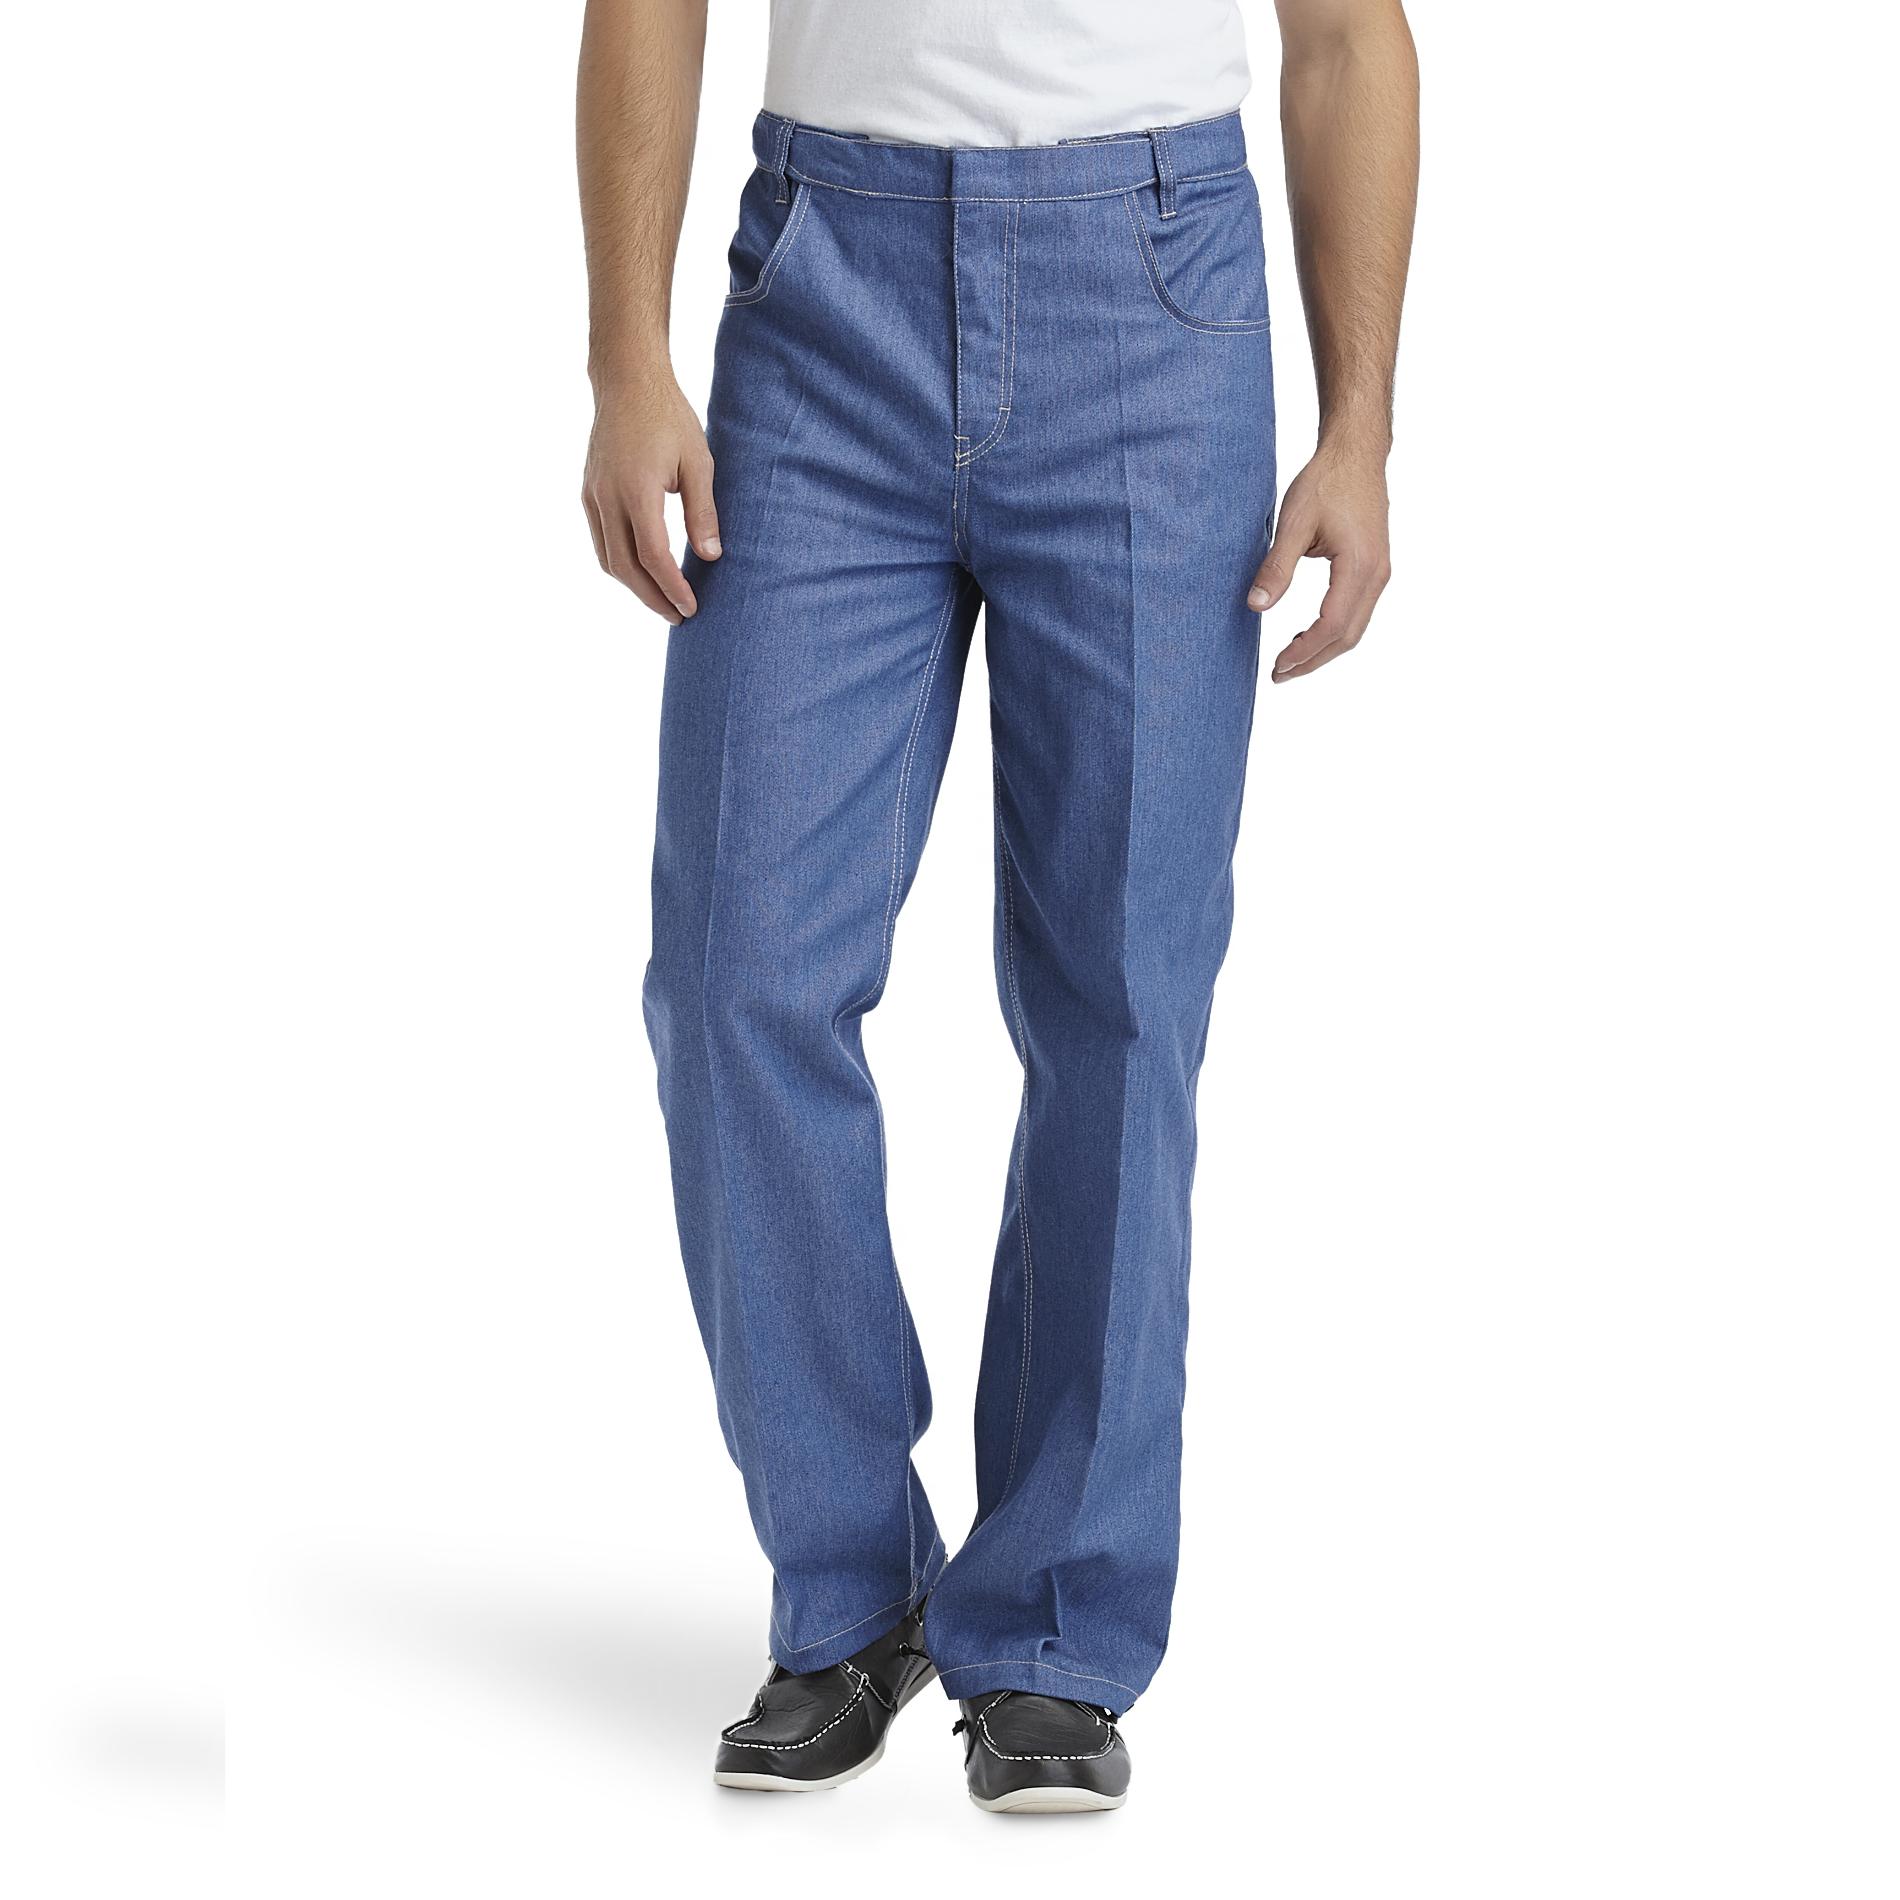 David Taylor Collection Men's Comfort FlexJeans